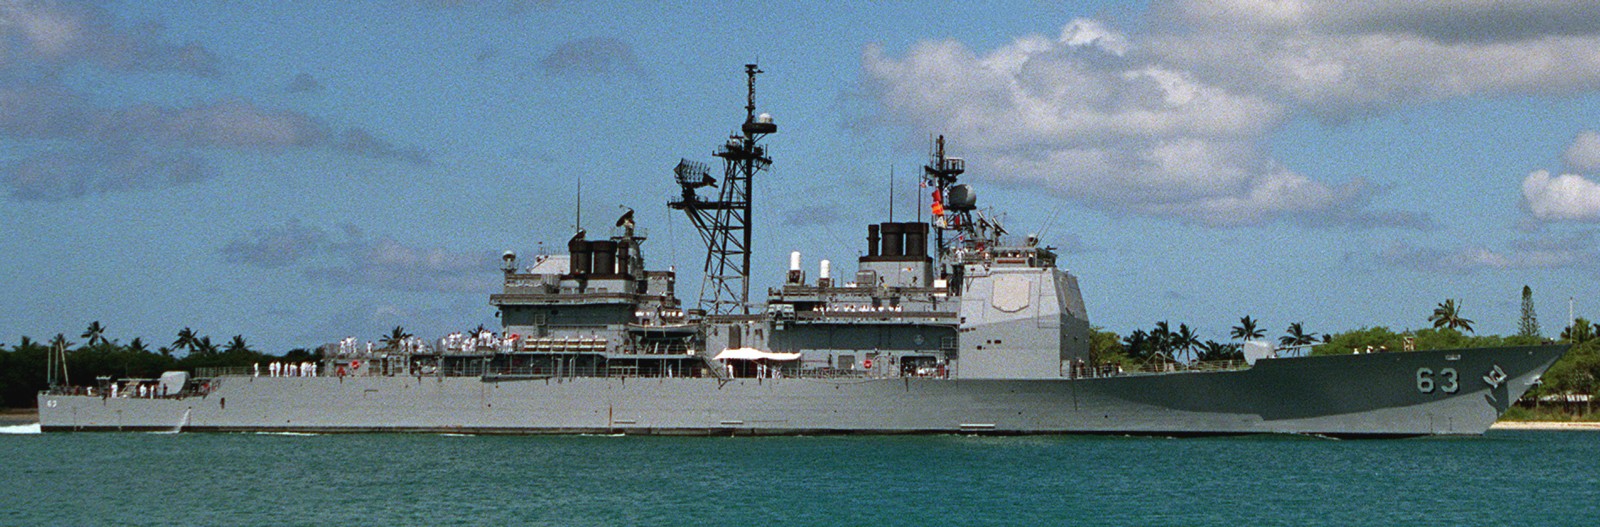 cg-63 uss cowpens ticonderoga class guided missile cruiser aegis us navy naval station pearl harbor hawaii 92